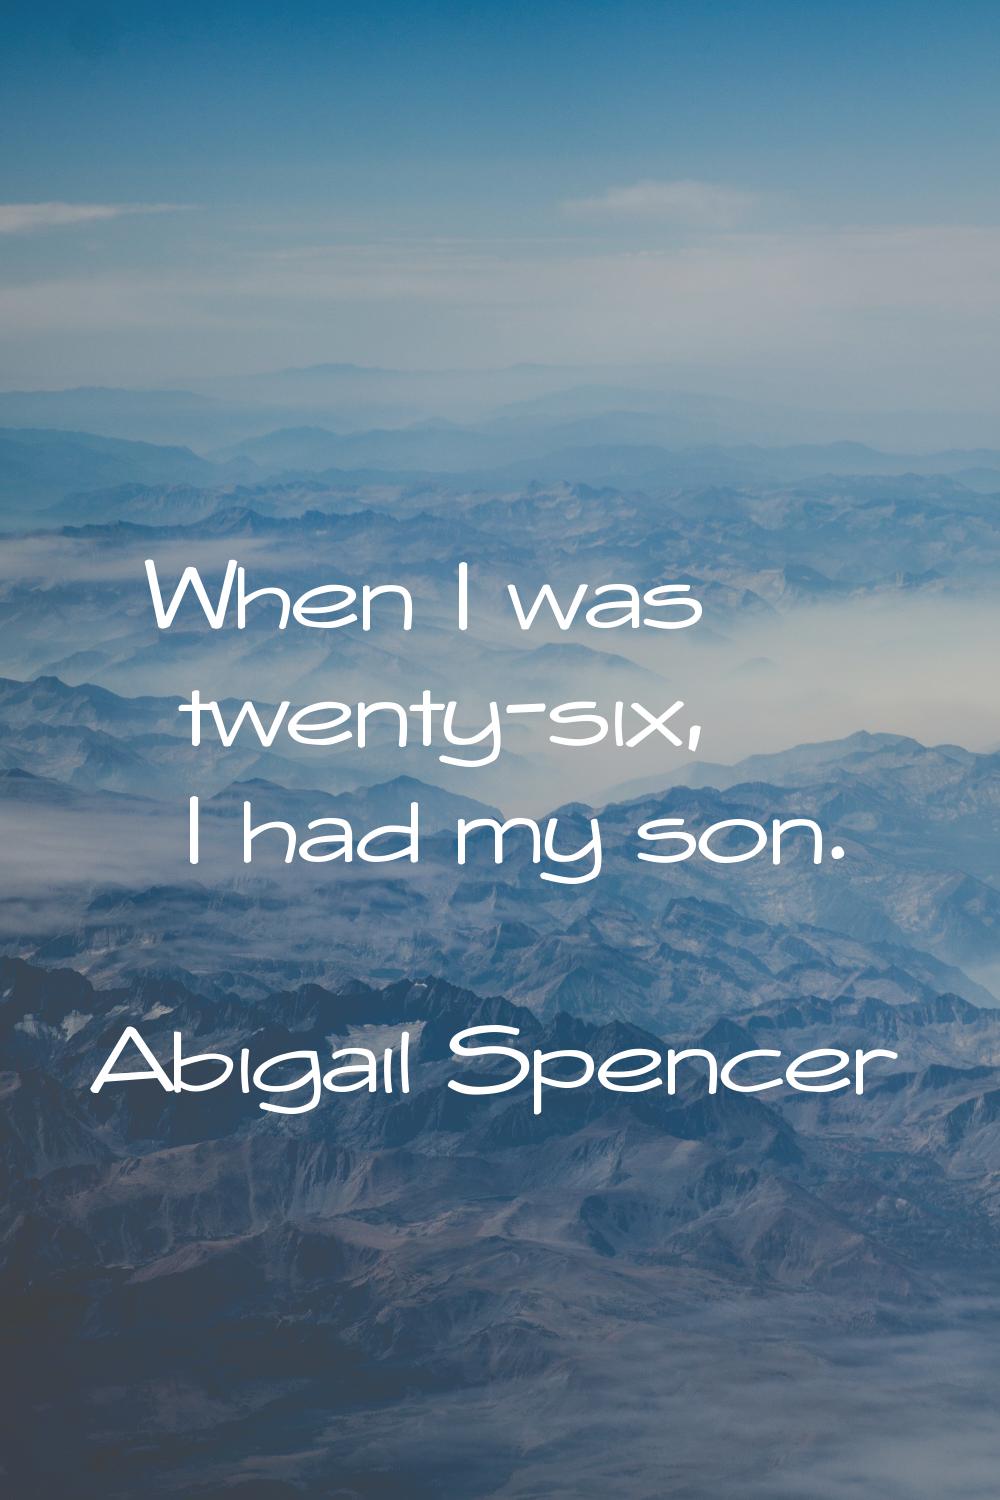 When I was twenty-six, I had my son.